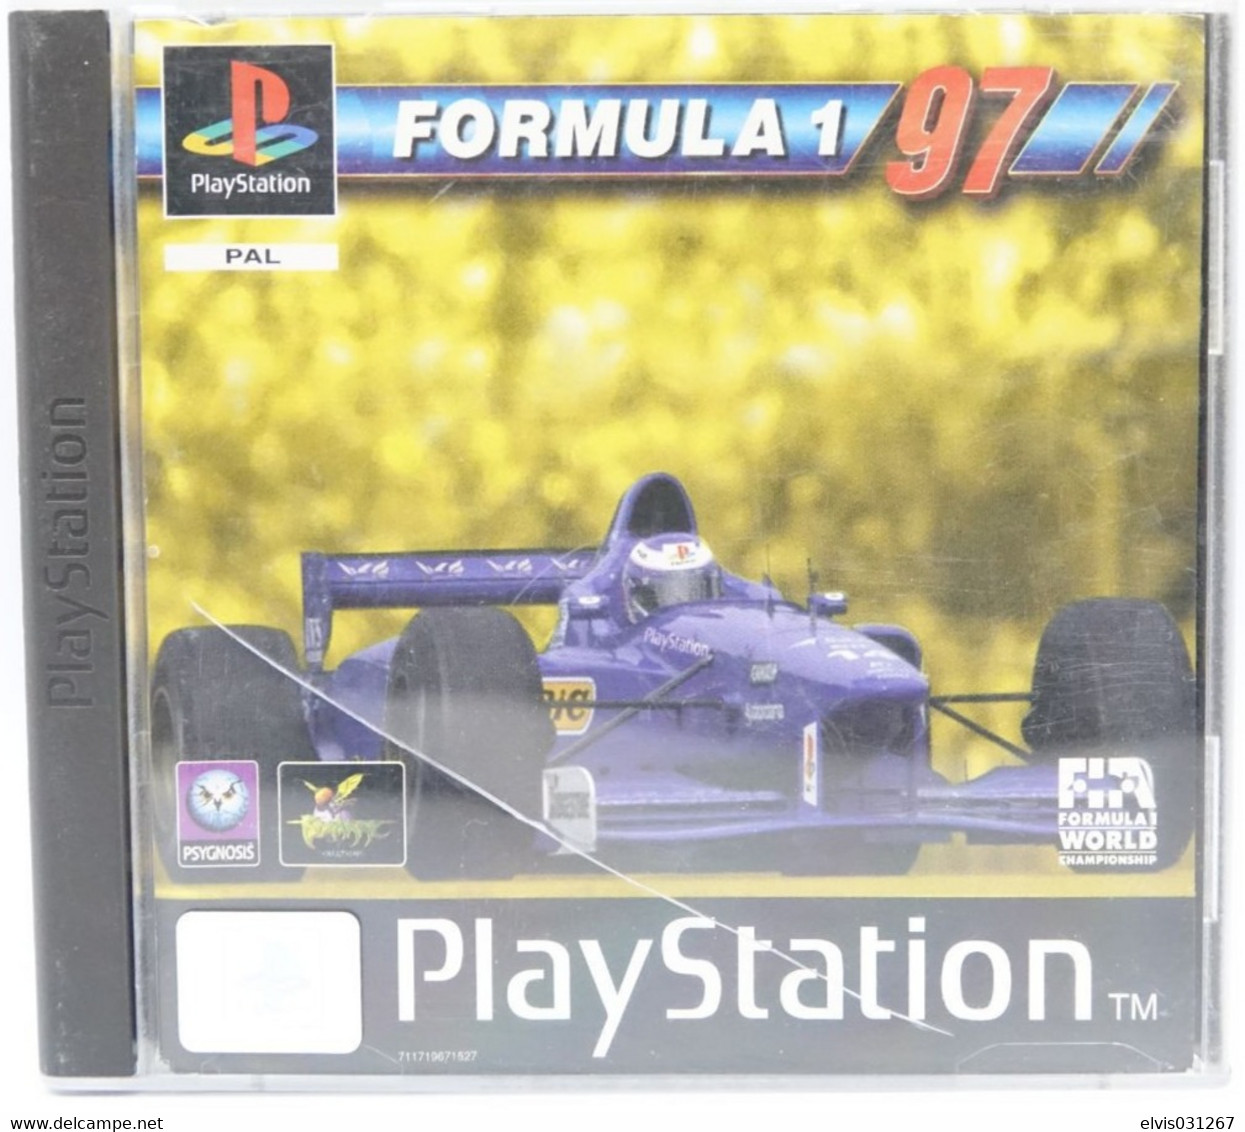 SONY PLAYSTATION ONE PS1 : FORMULA 1 97 - Playstation